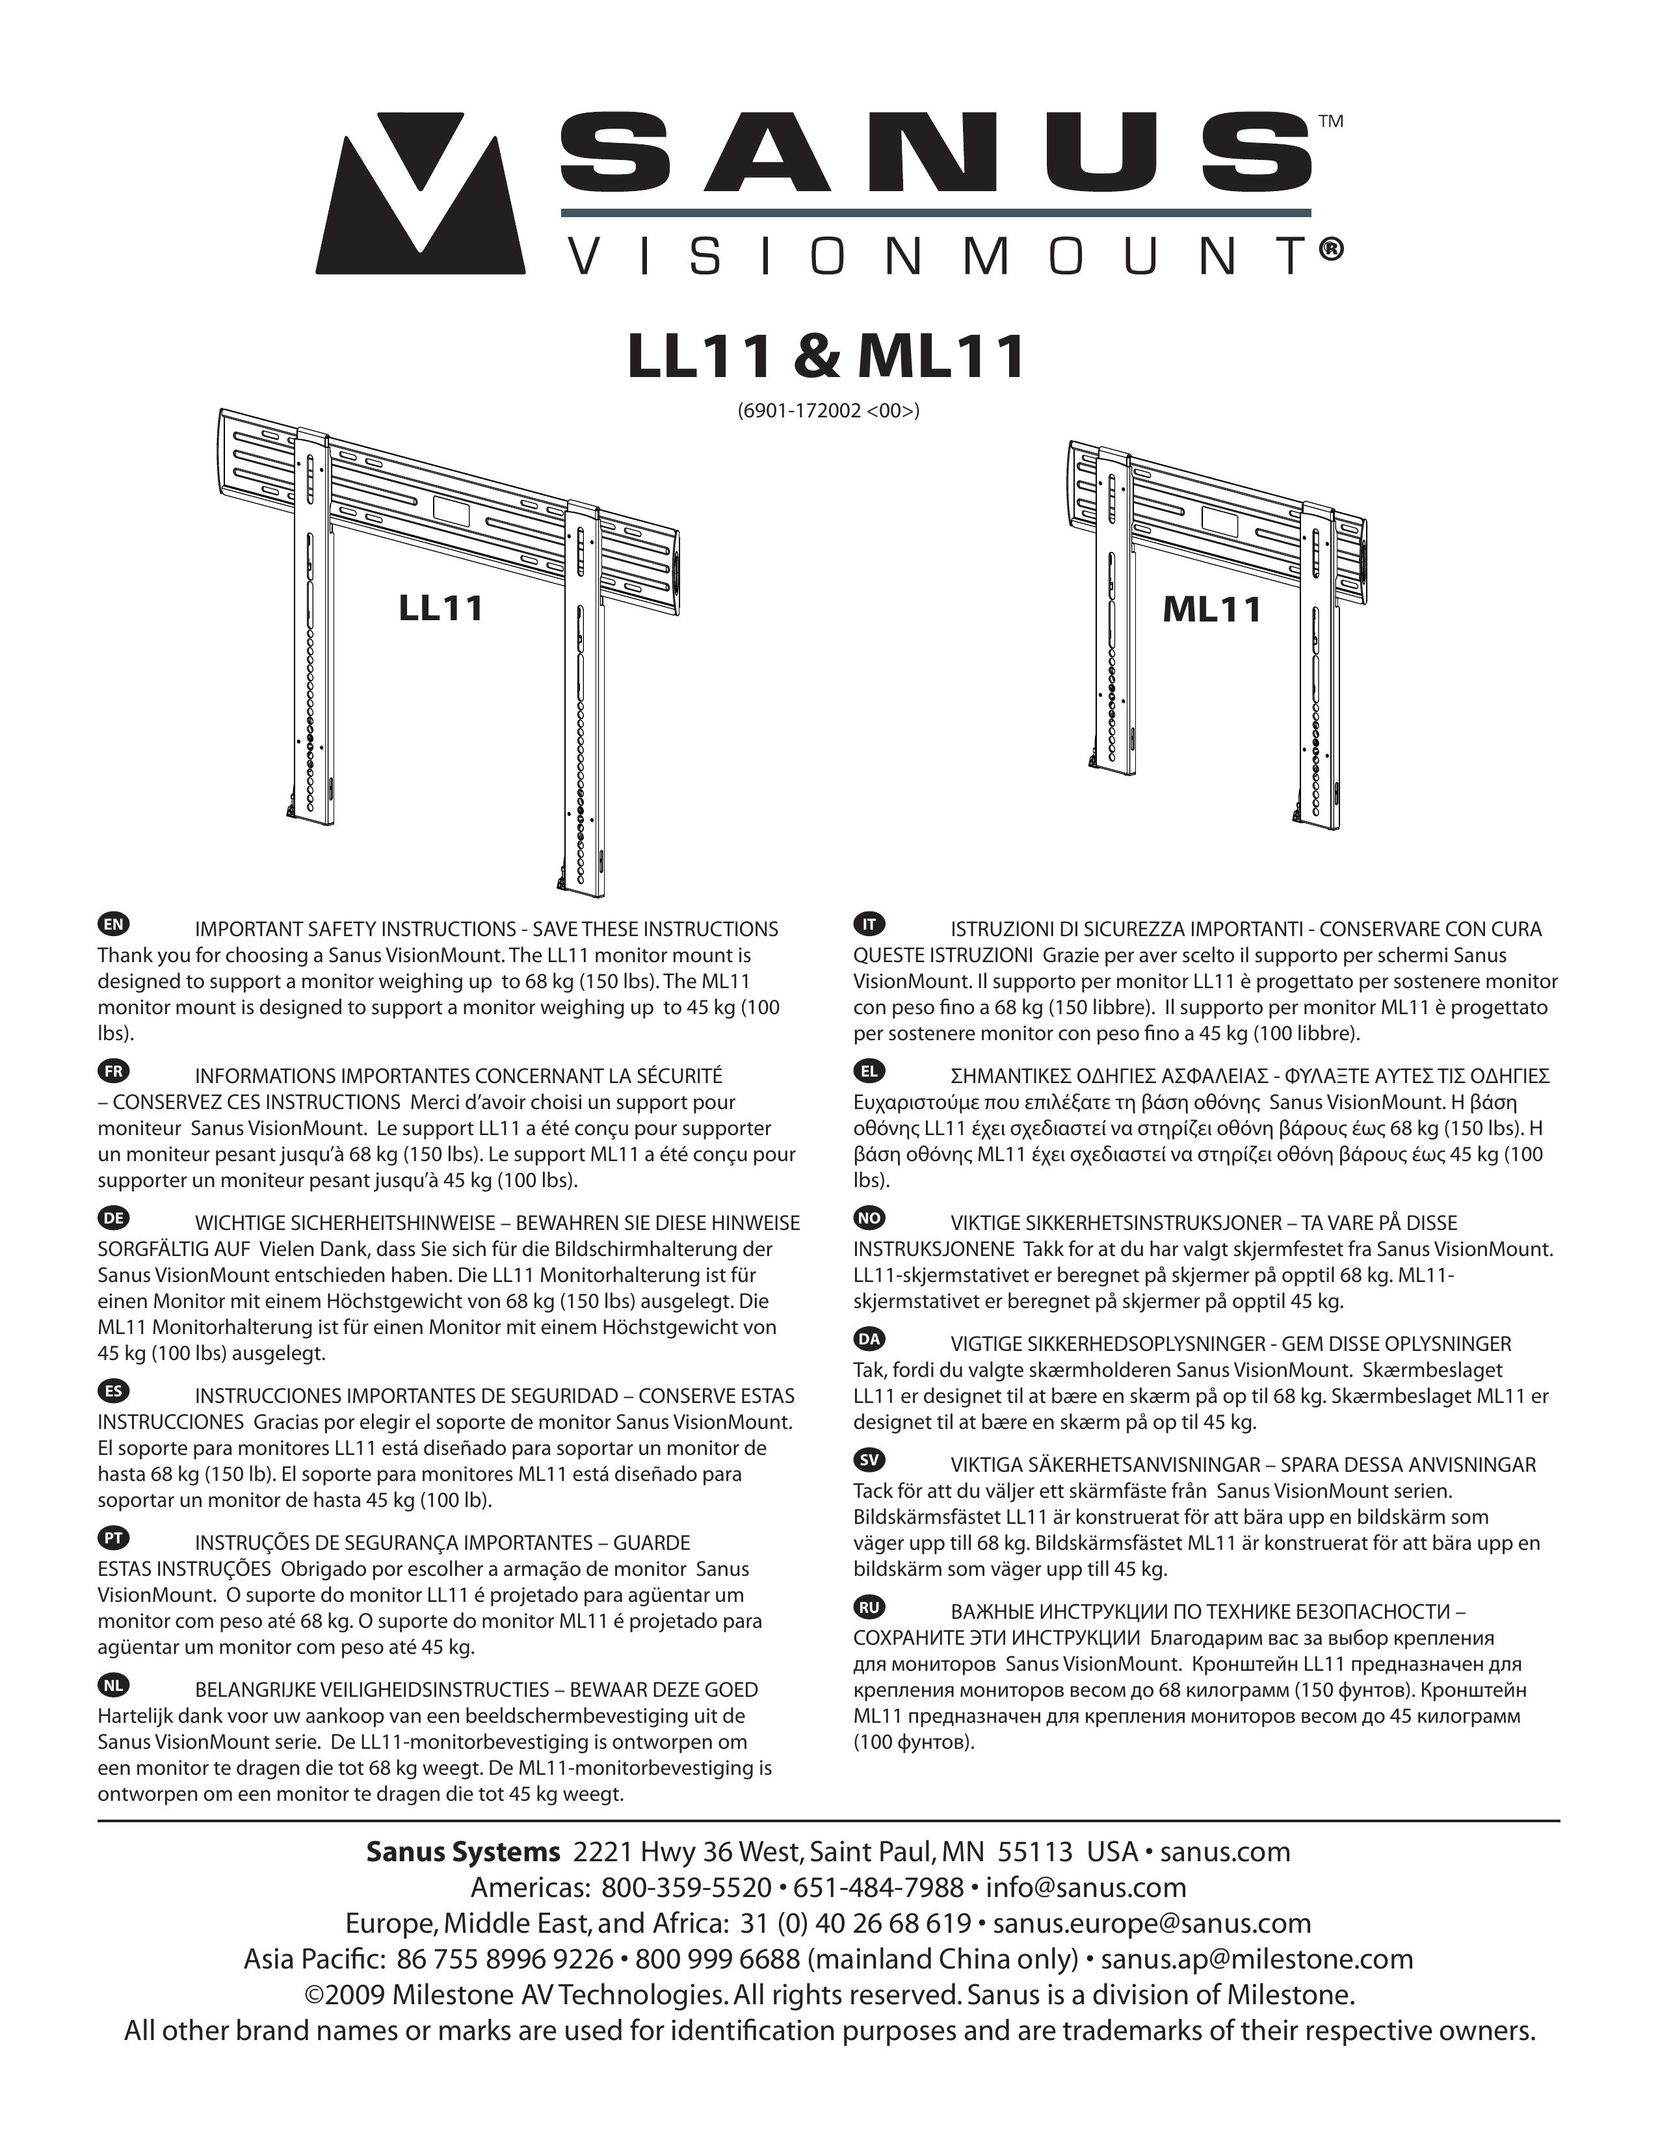 Sanus Systems ML11 TV Mount User Manual